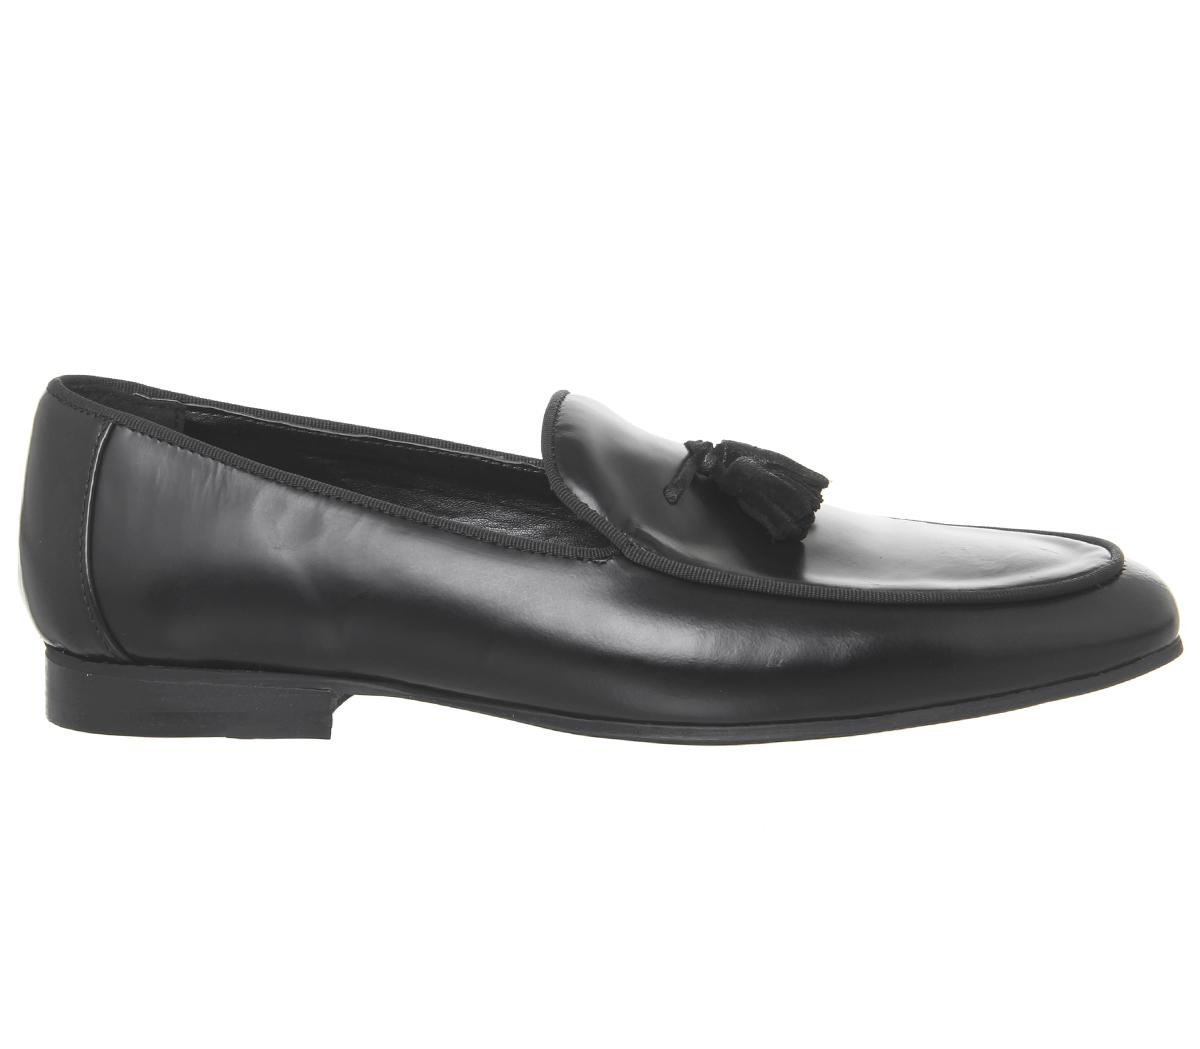 Walk London Jude Loafers Black Leather - Men’s Smart Shoes